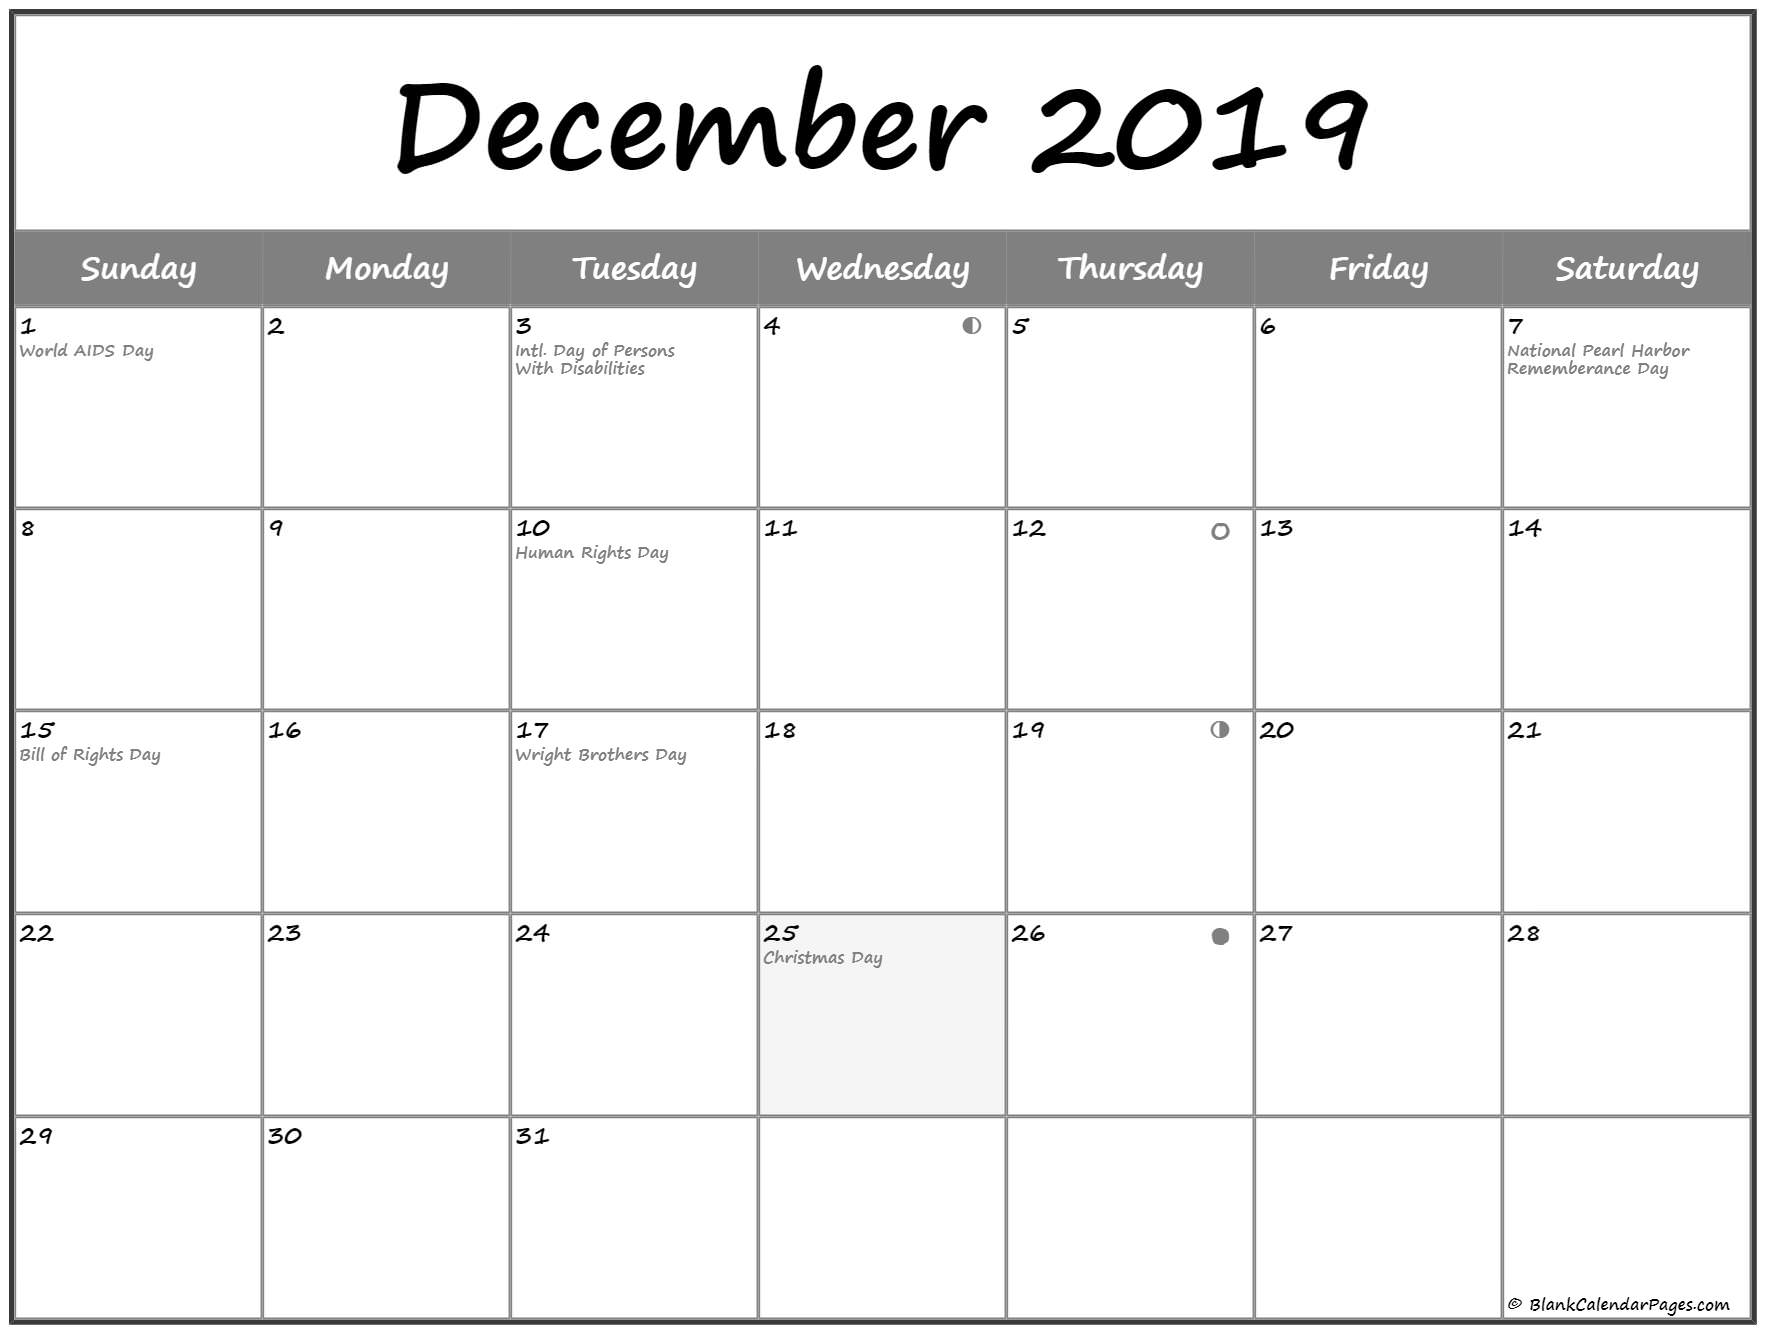 December 2019 Lunar Calendar